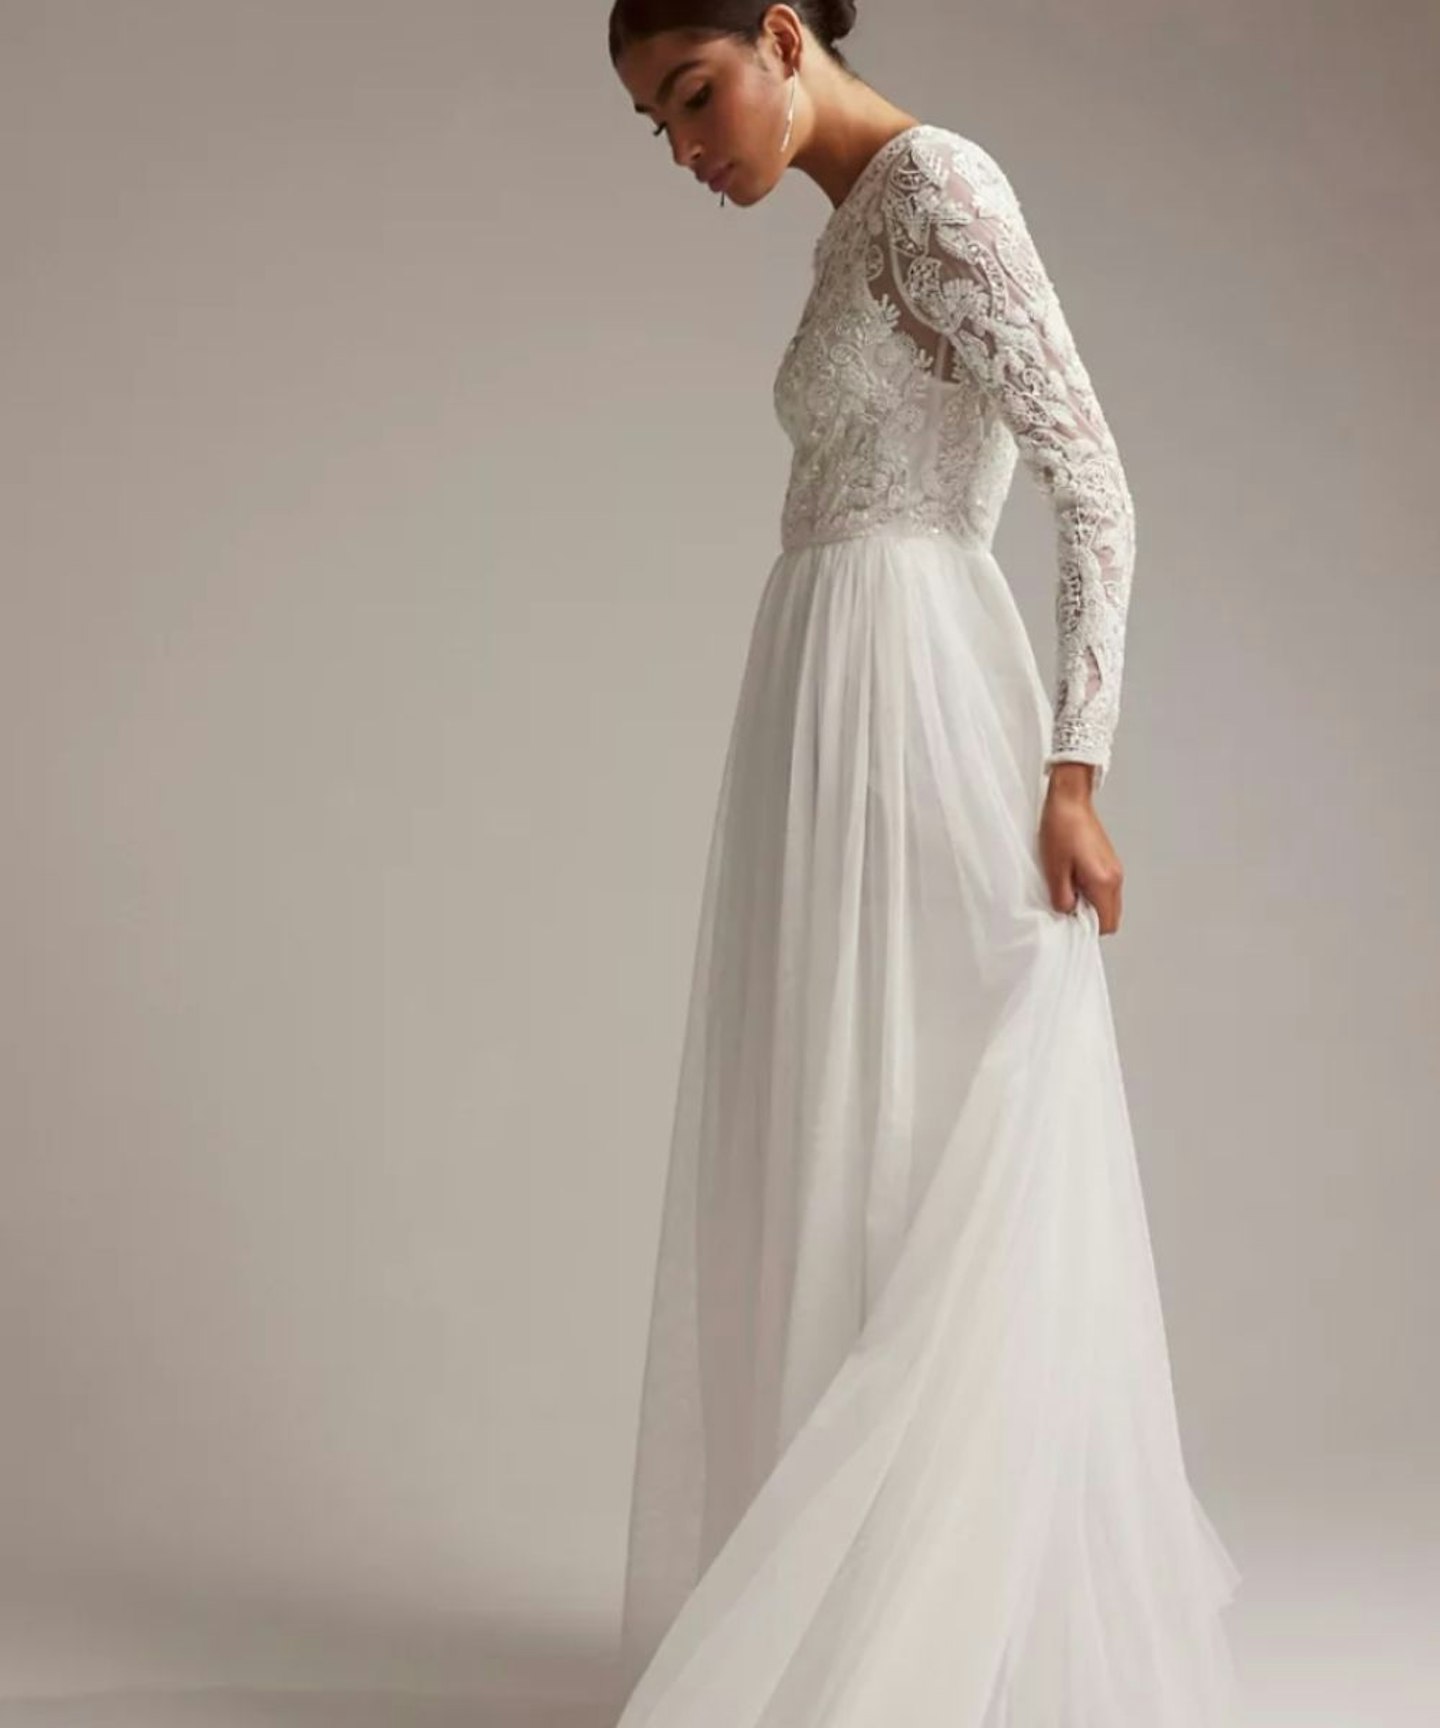 ASOS EDITION Elizabeth Long Sleeve Wedding Dress with Beaded Bodice in White